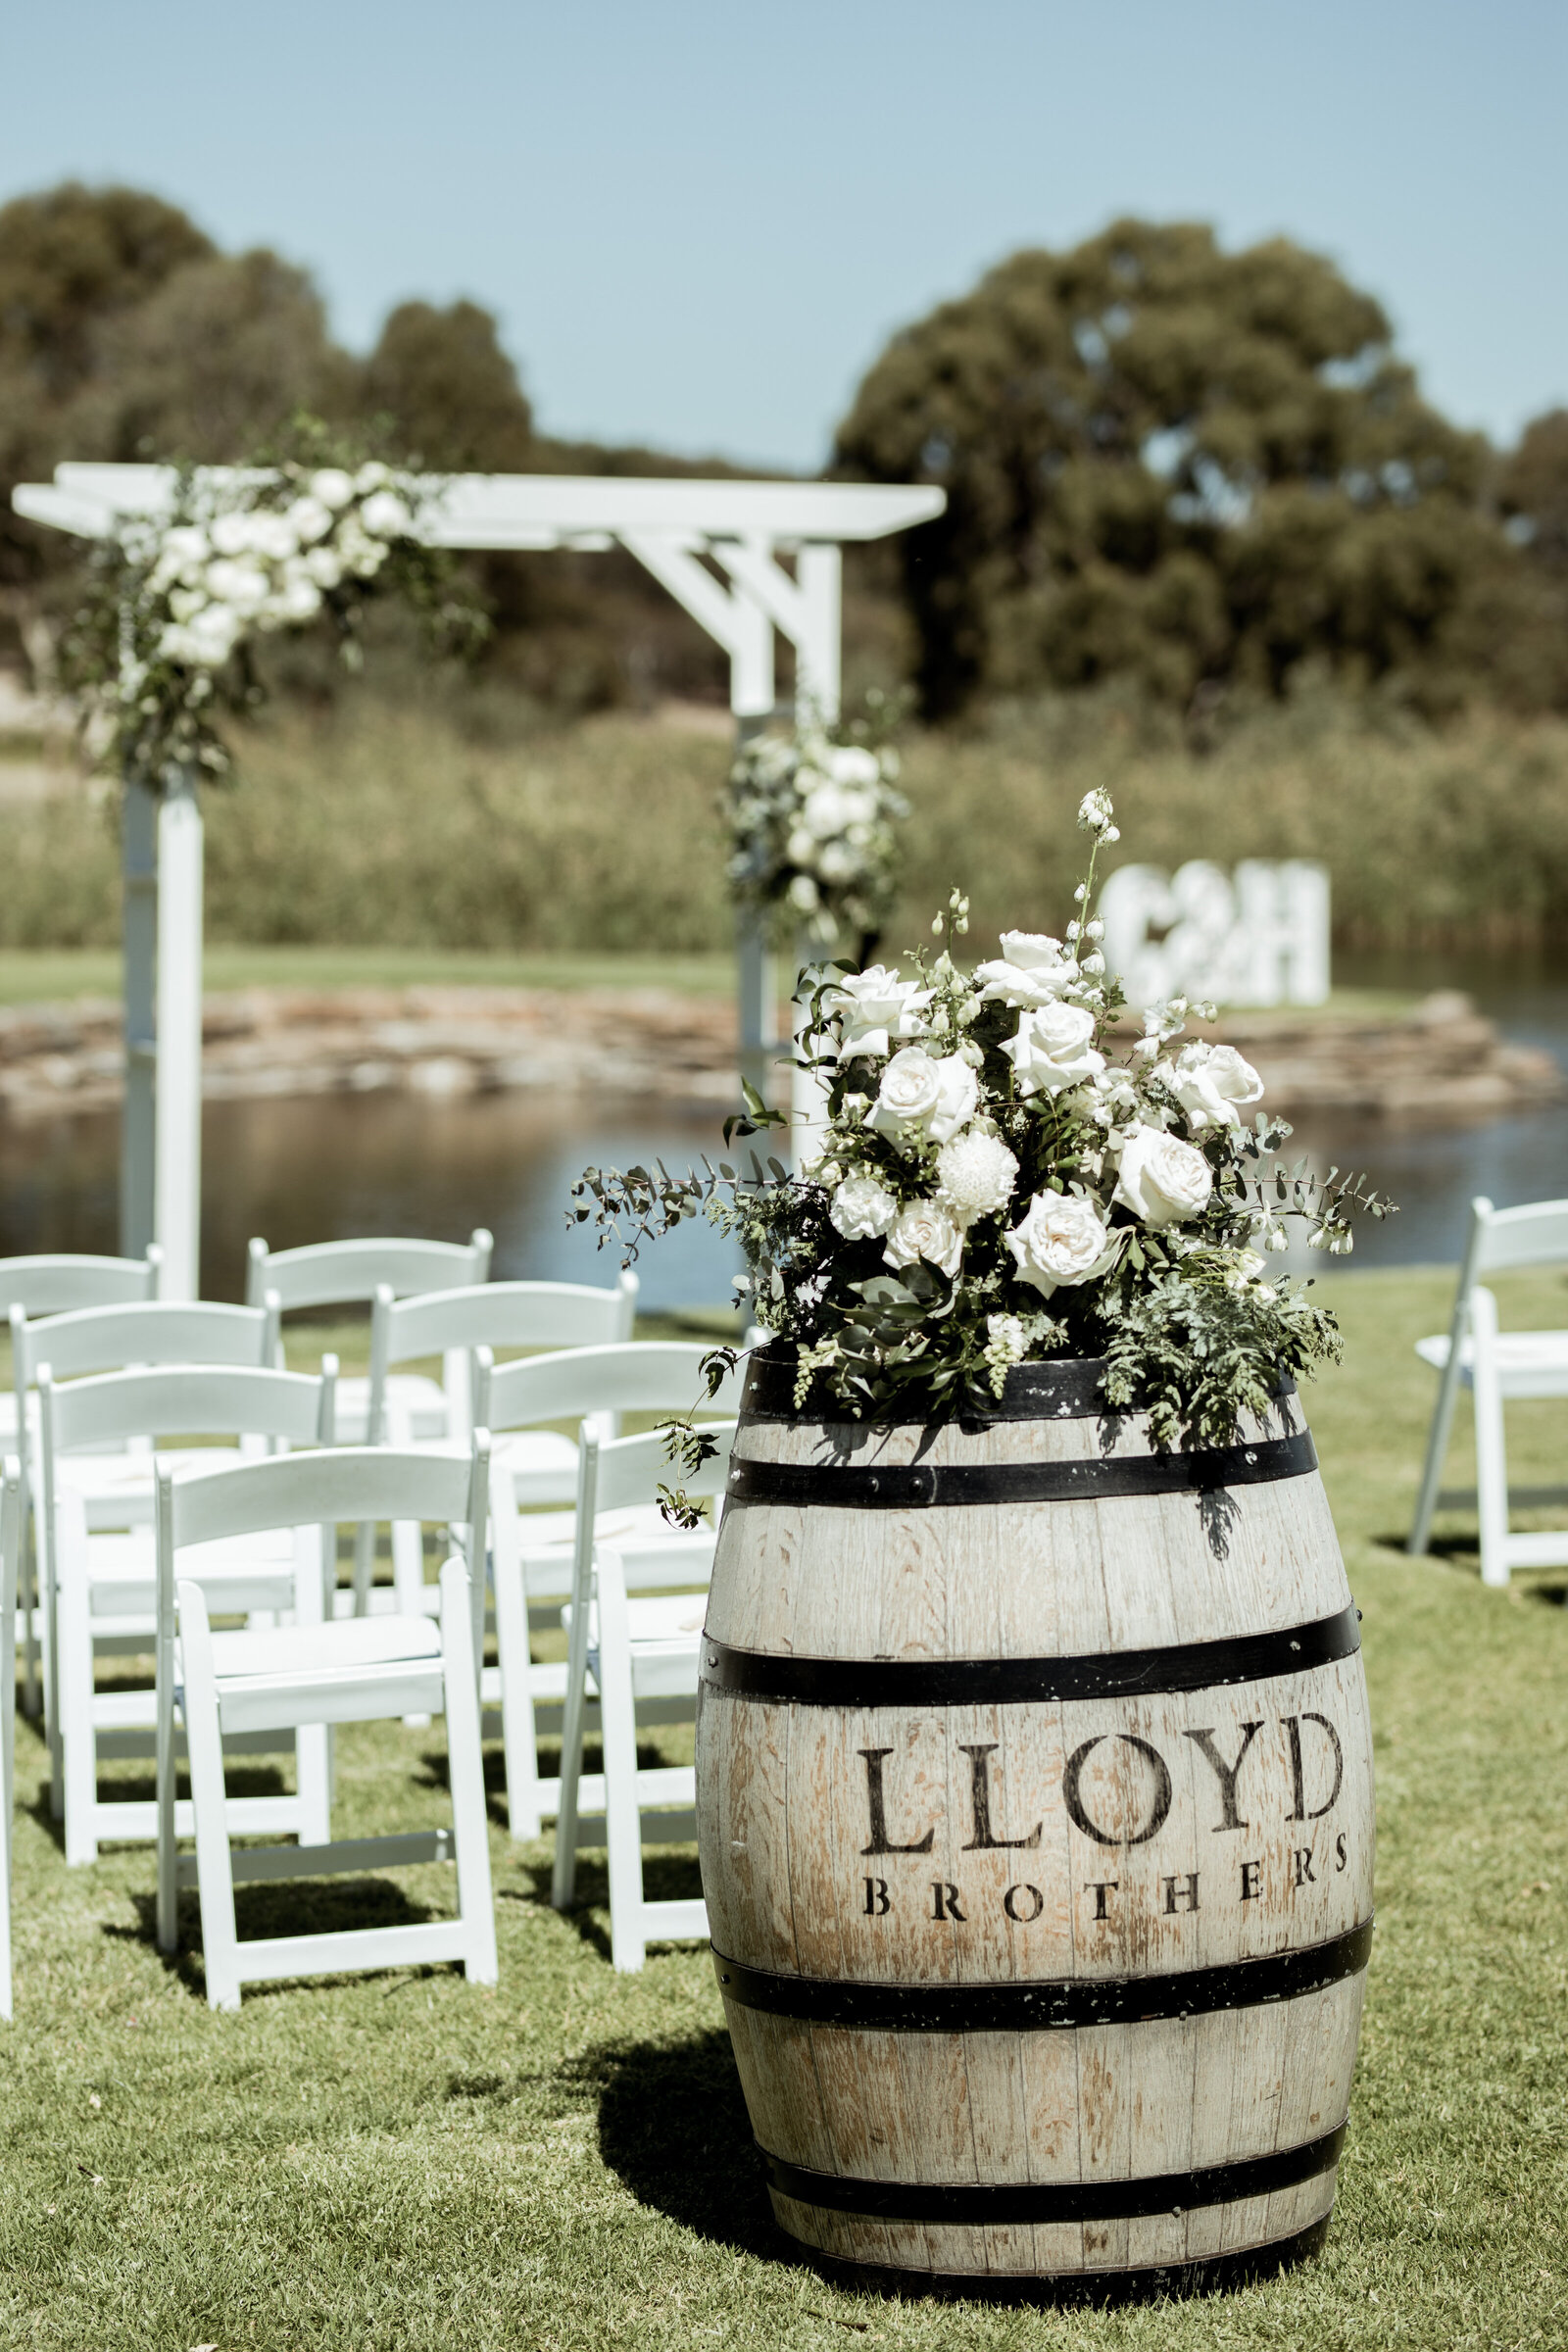 Helen-Craig-Lloyd-Brothers-Wines-Wedding-Rexvil-Photography-305